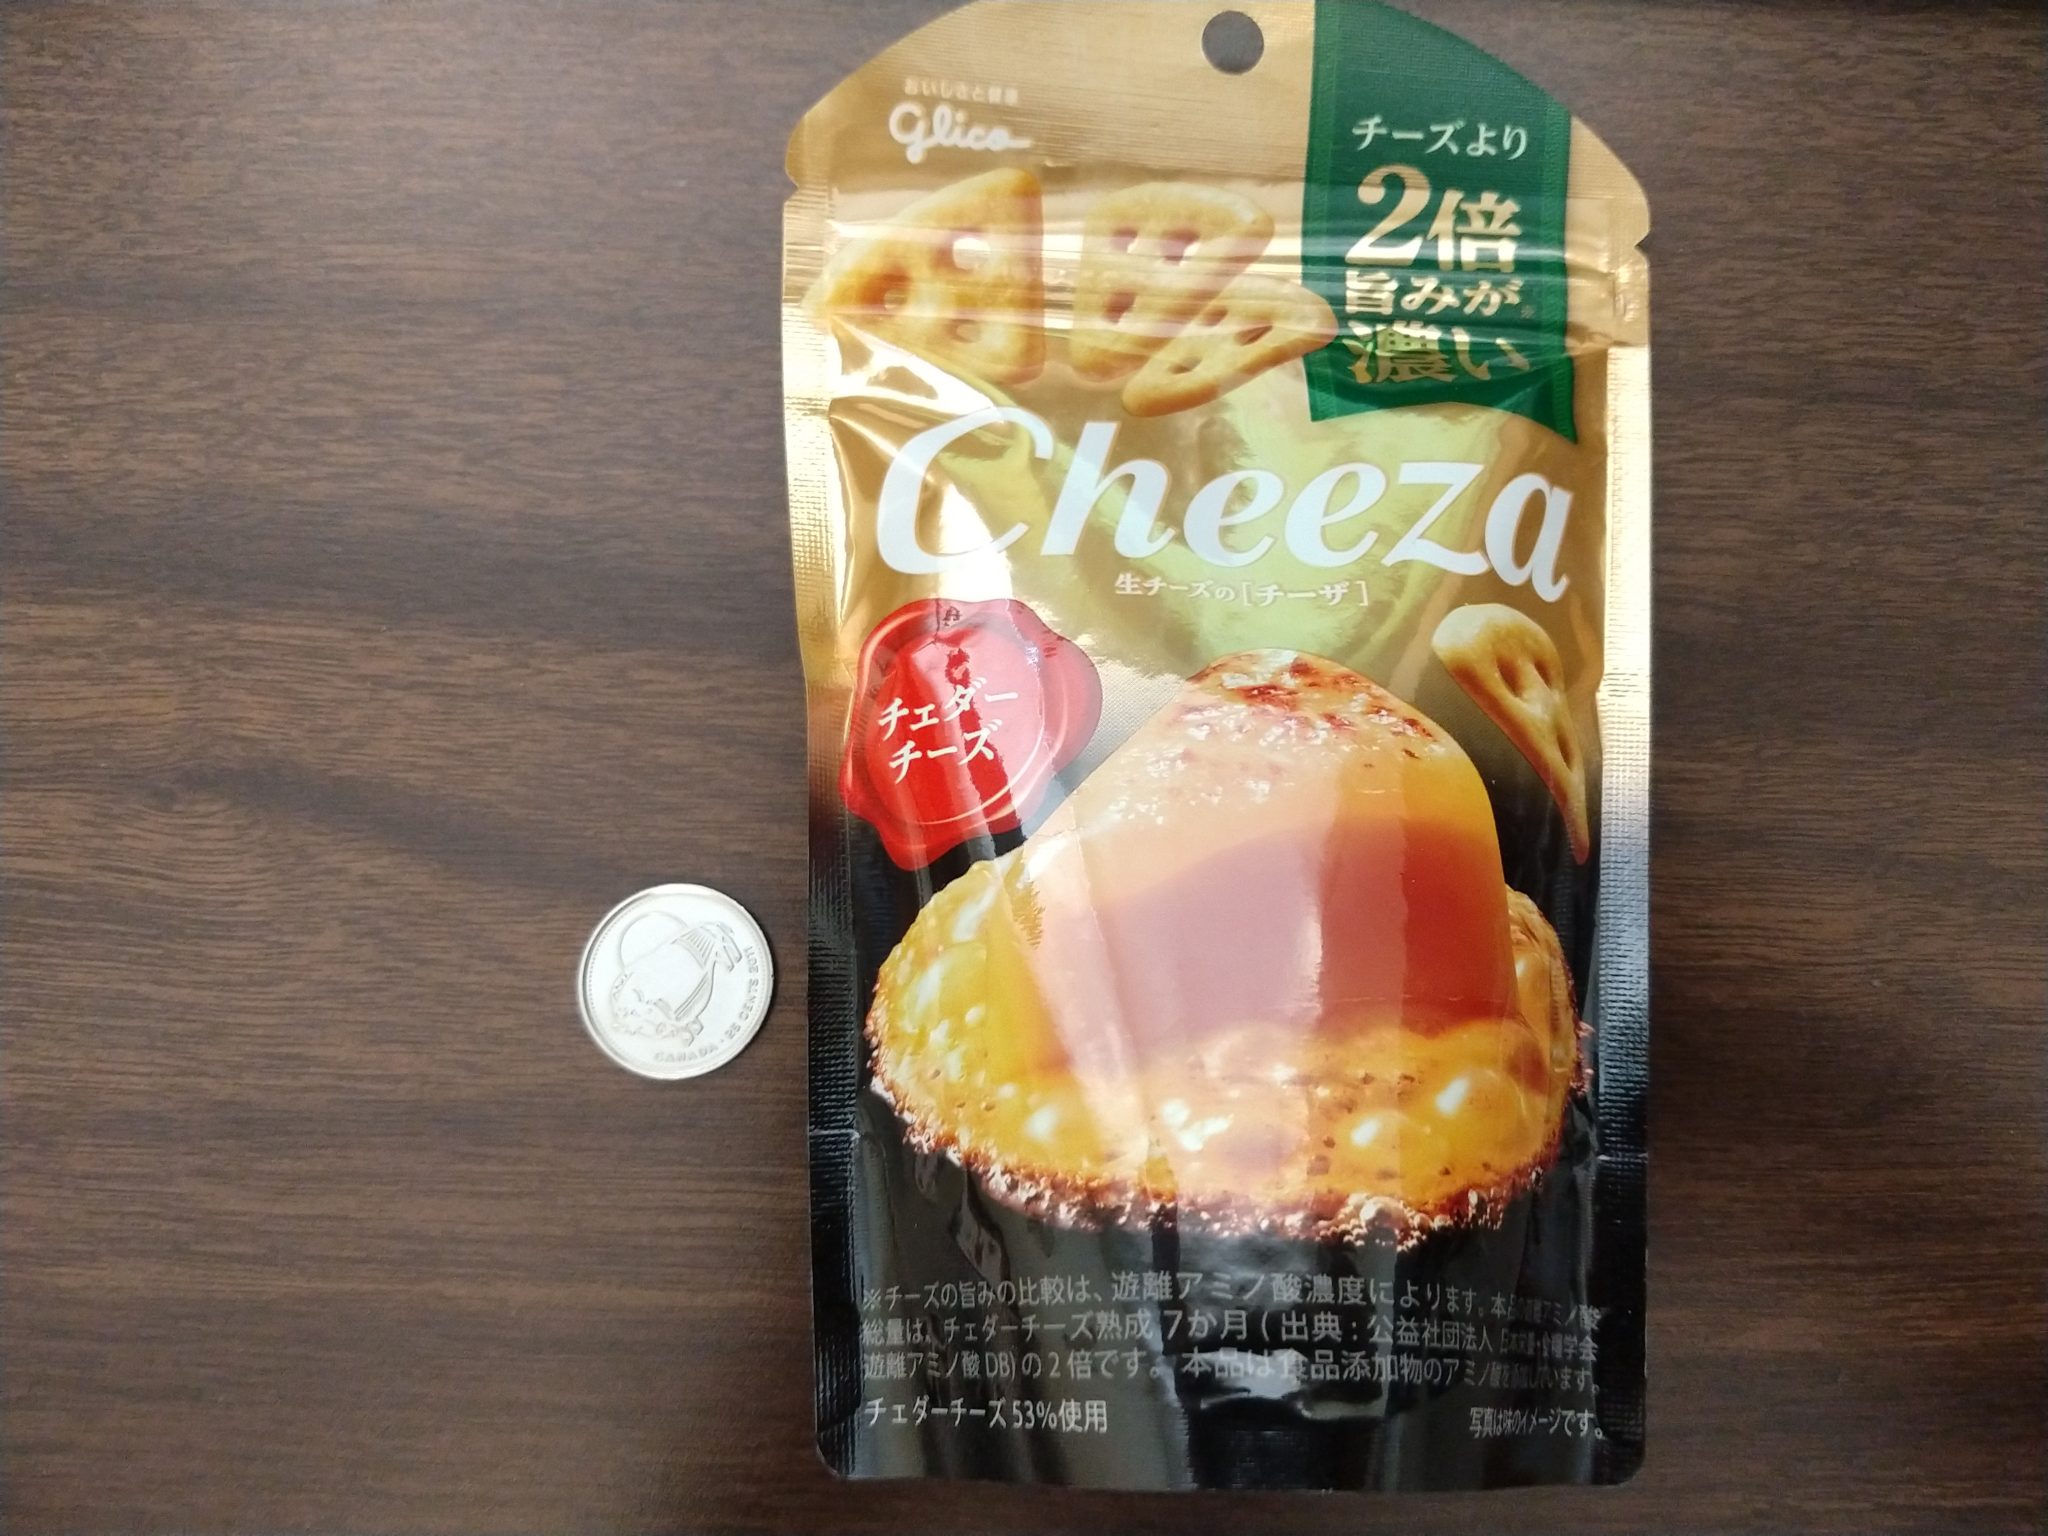 Cheeza Crackers – Cheddar Cheese